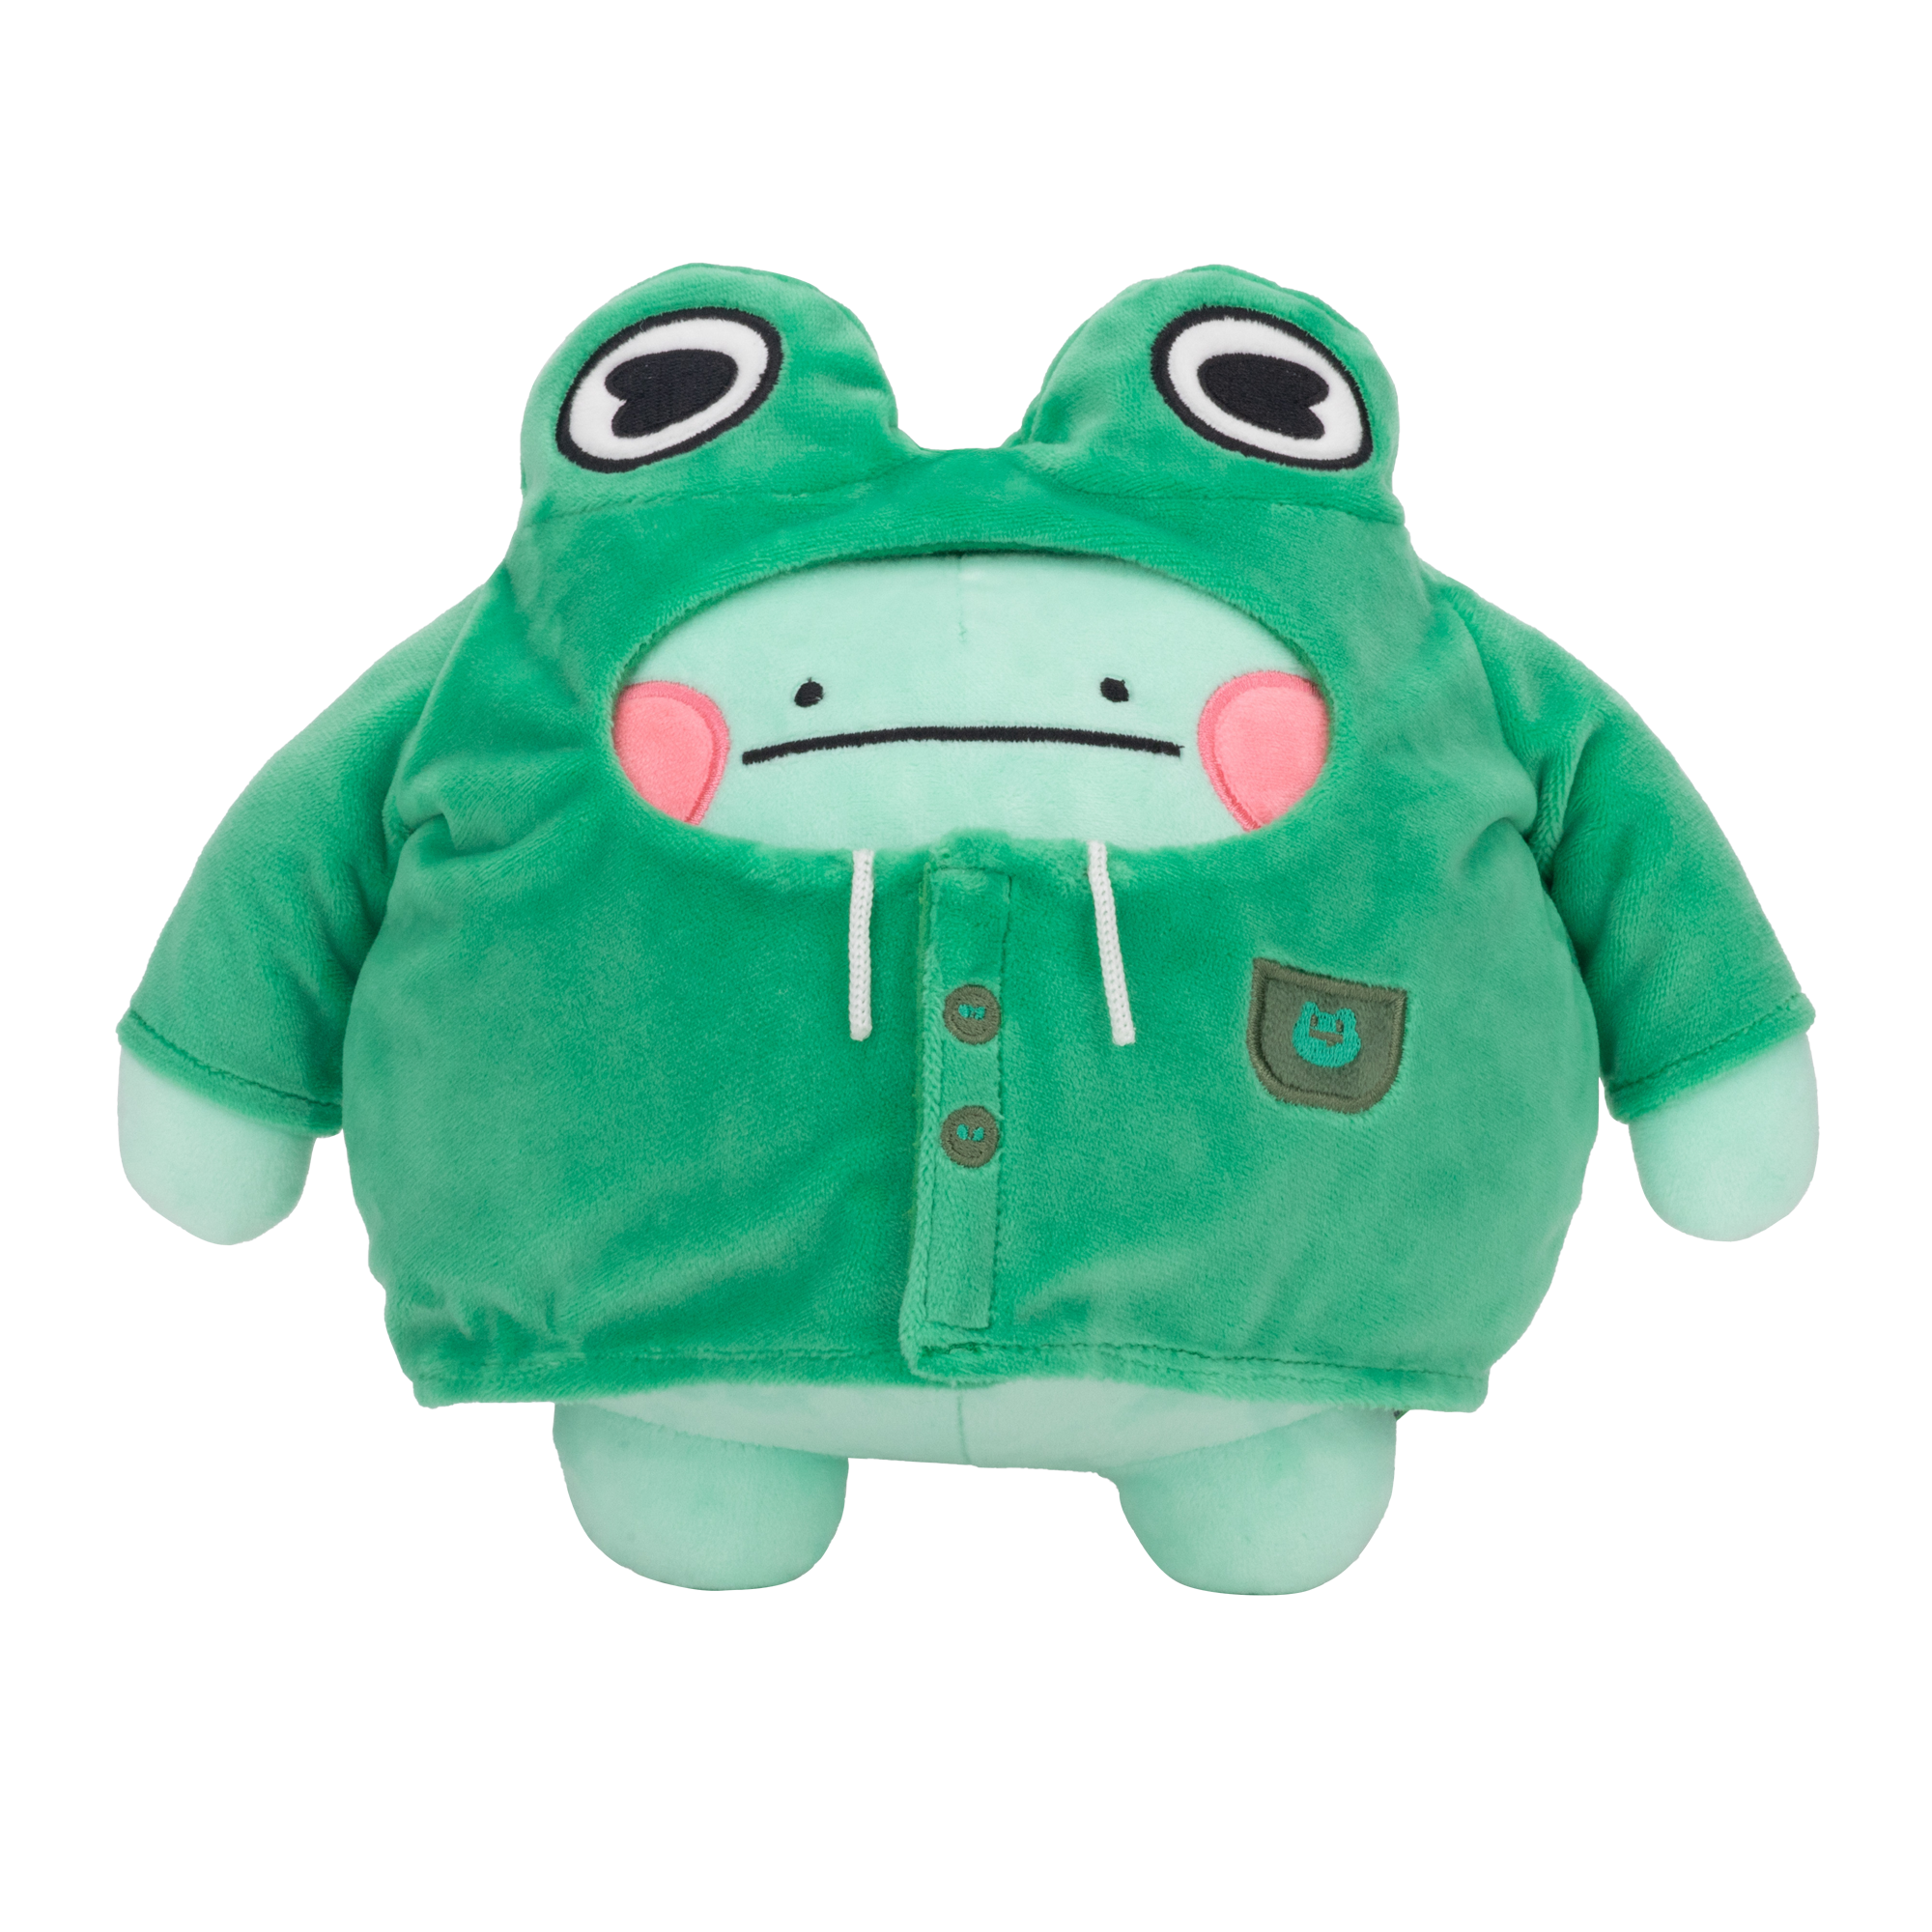 Froyo the Frog